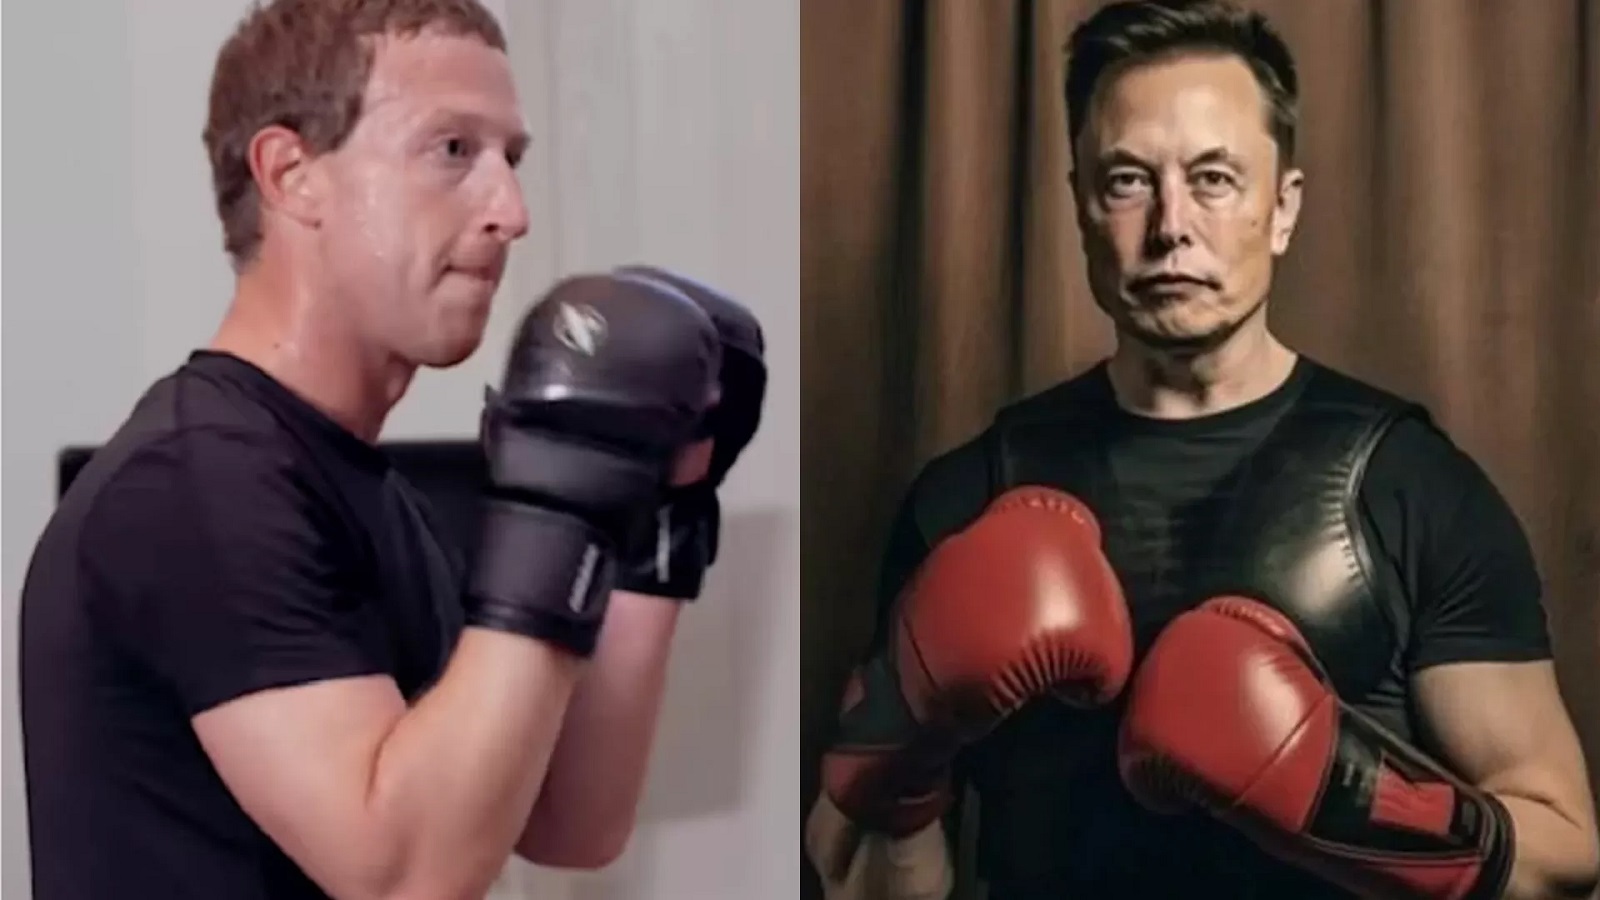 Elon musk, Mark Zuckerberg, MMA, sfida, Facebook, SpaceX, Tesla